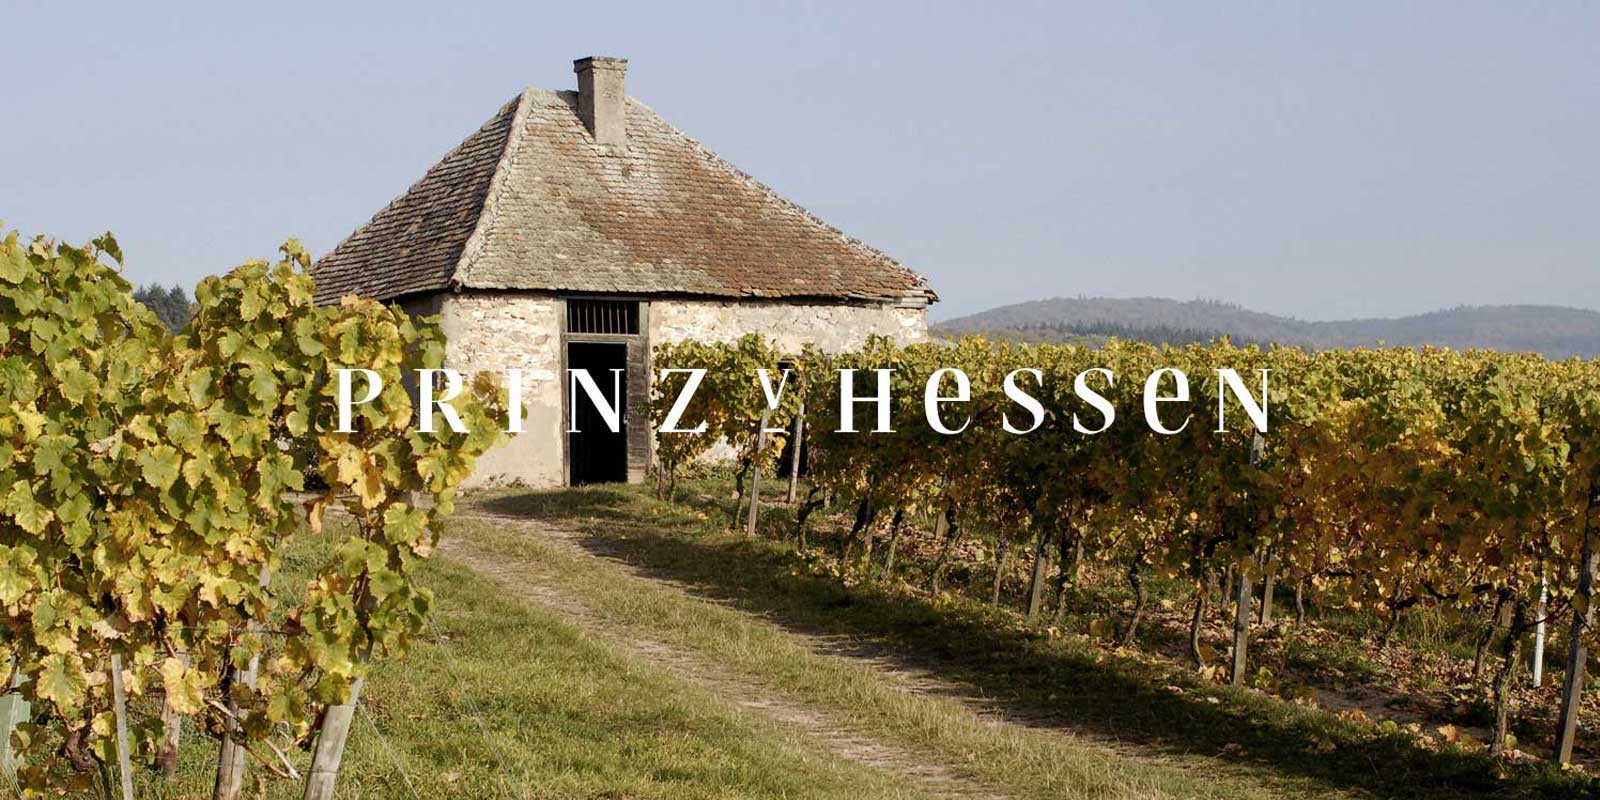 Vinarstvi Prince of Hesse - vinarska oblast Rheingau Vinarstvi PRINZ VON HESSEN v Johannisbergu v Rheingau je jednim z prednich vyrobcu ryzlinku v Nemecku a je zakladajicim clenem VDP regionalniho sdruzeni Rheingau. Cetna uznani doma i v zahranici odrazi vinarstvi PRINZ VON HESSEN, ktere je na spickove urovni. Vina a sumiva vina z vinarstvi PRINZ VON HESSEN ziskala mnoho oceneni a ziskala vysoka mezinarodni oceneni.